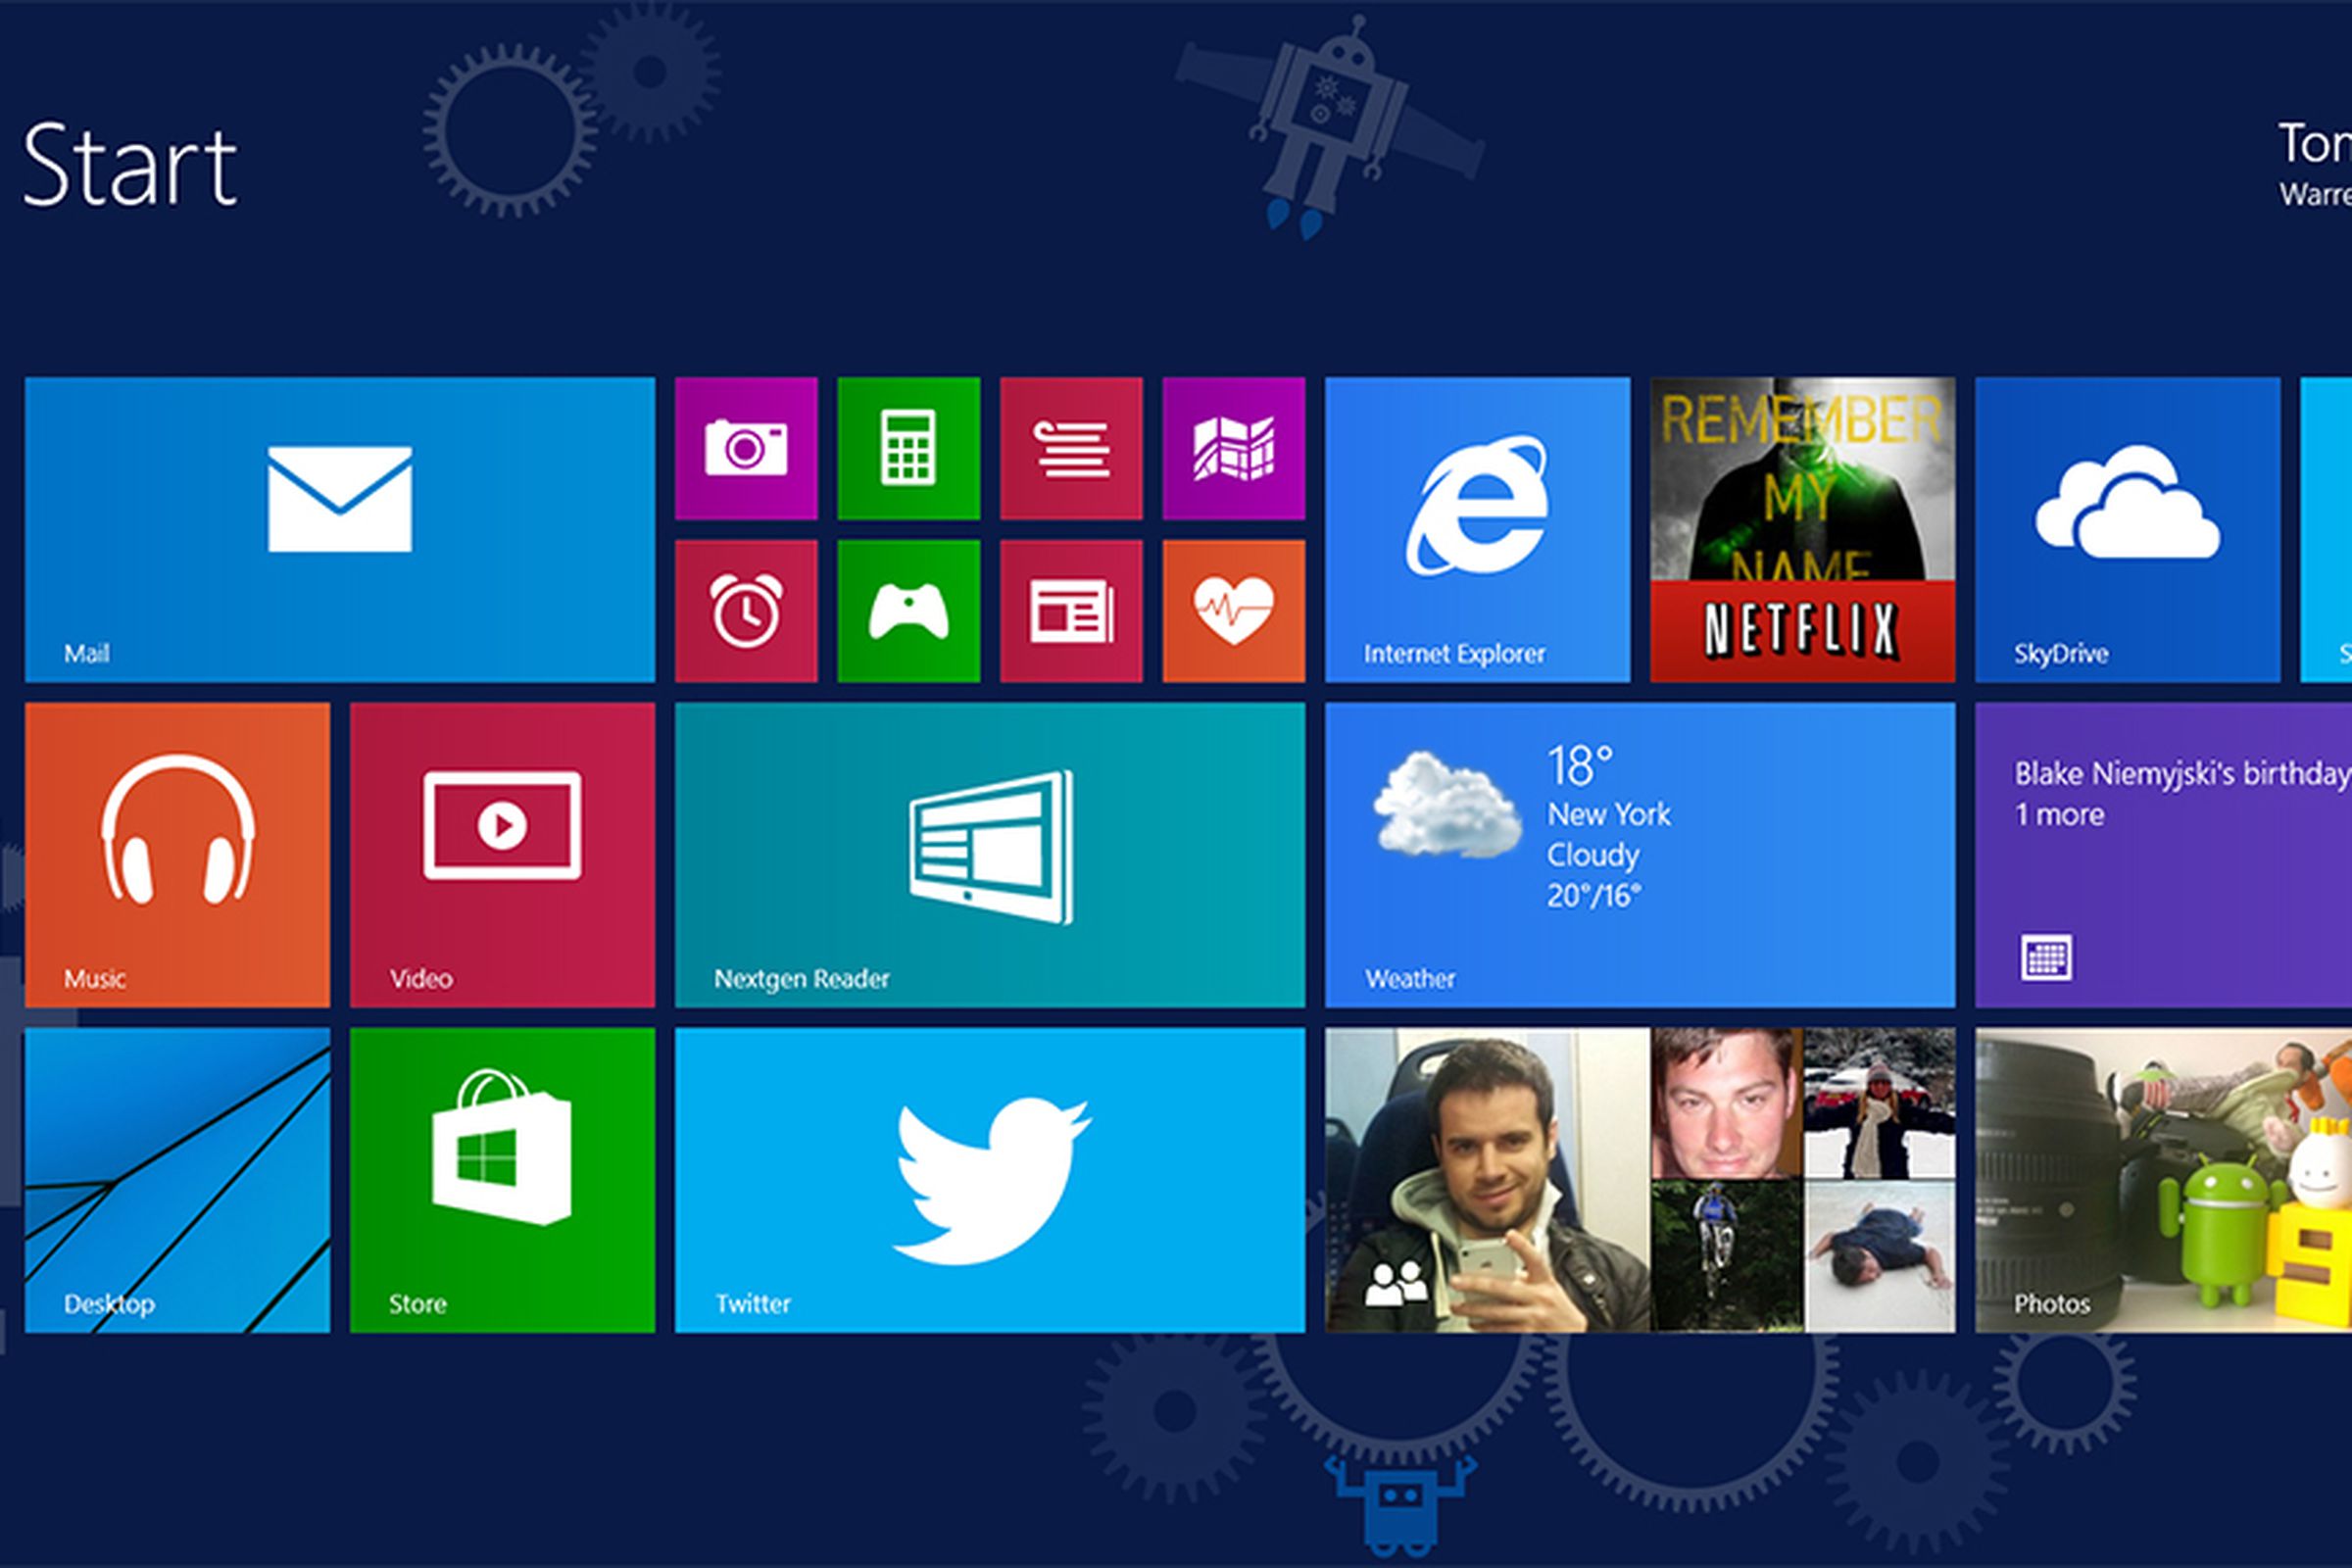 Windows 8.1 start screen